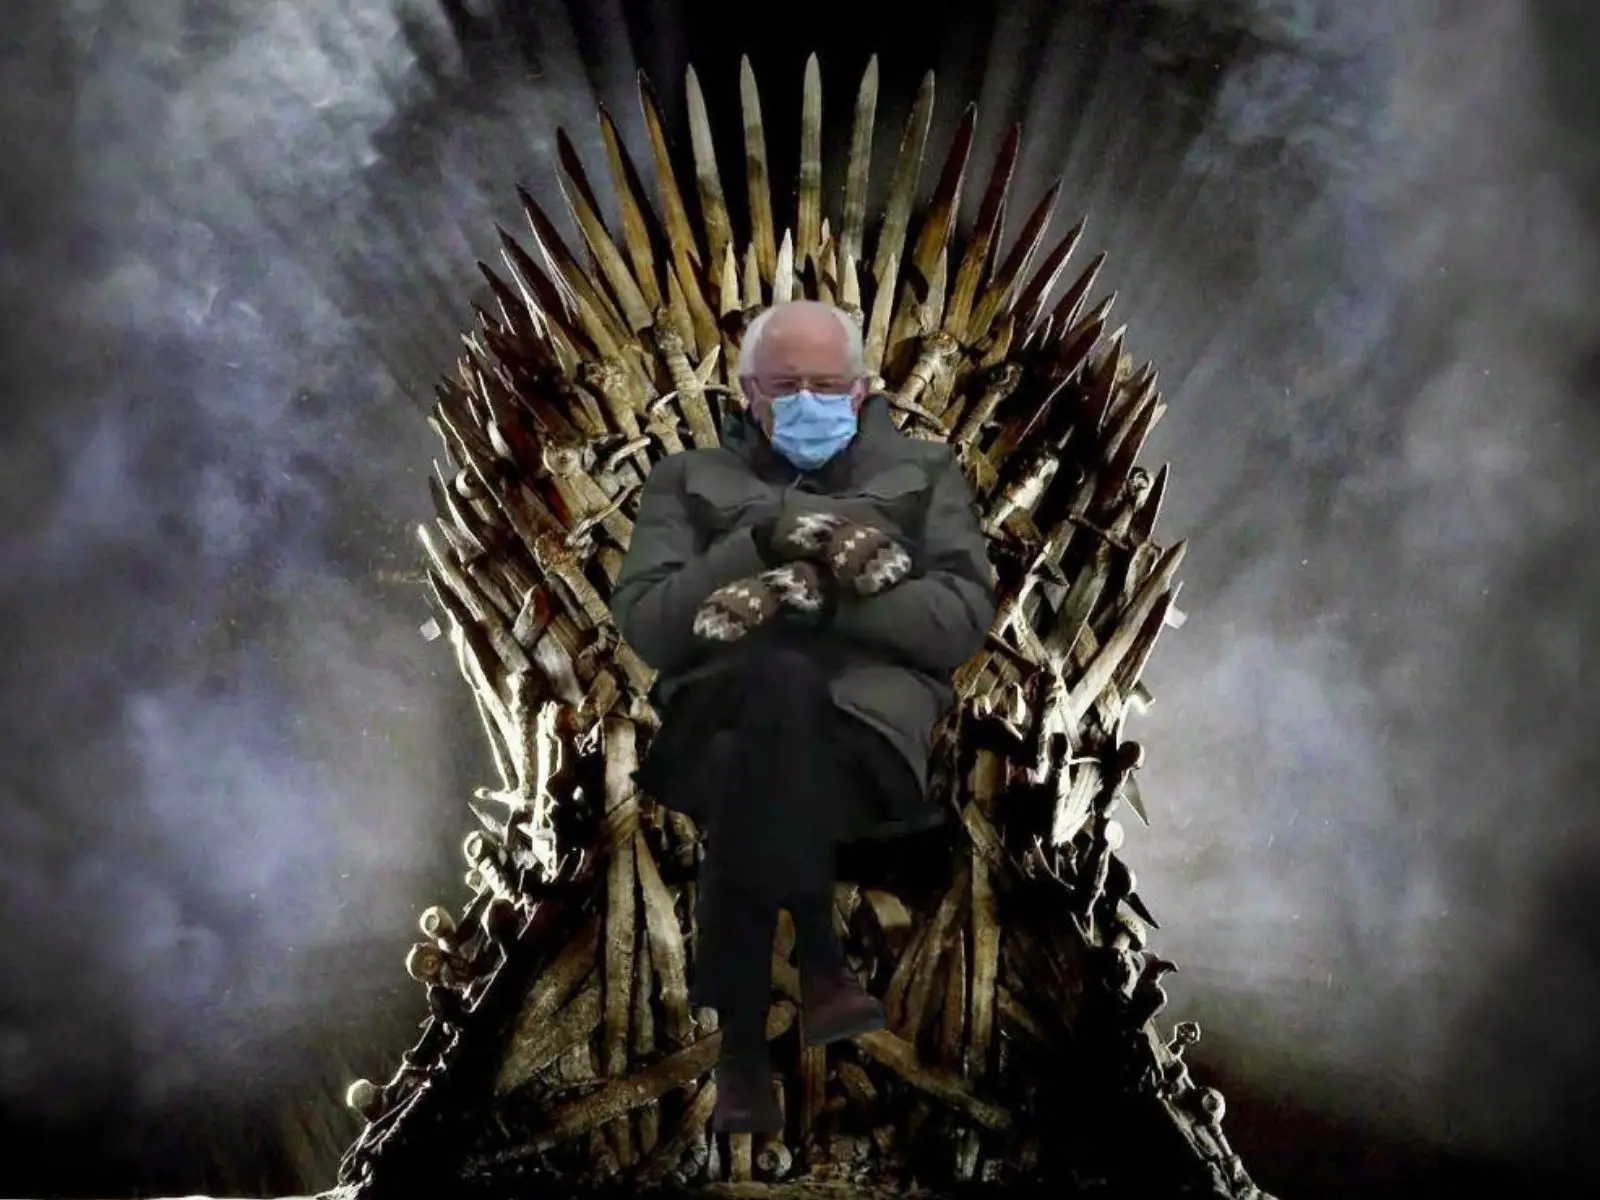 Bernie Game of Thrones Meme on Iron Throne